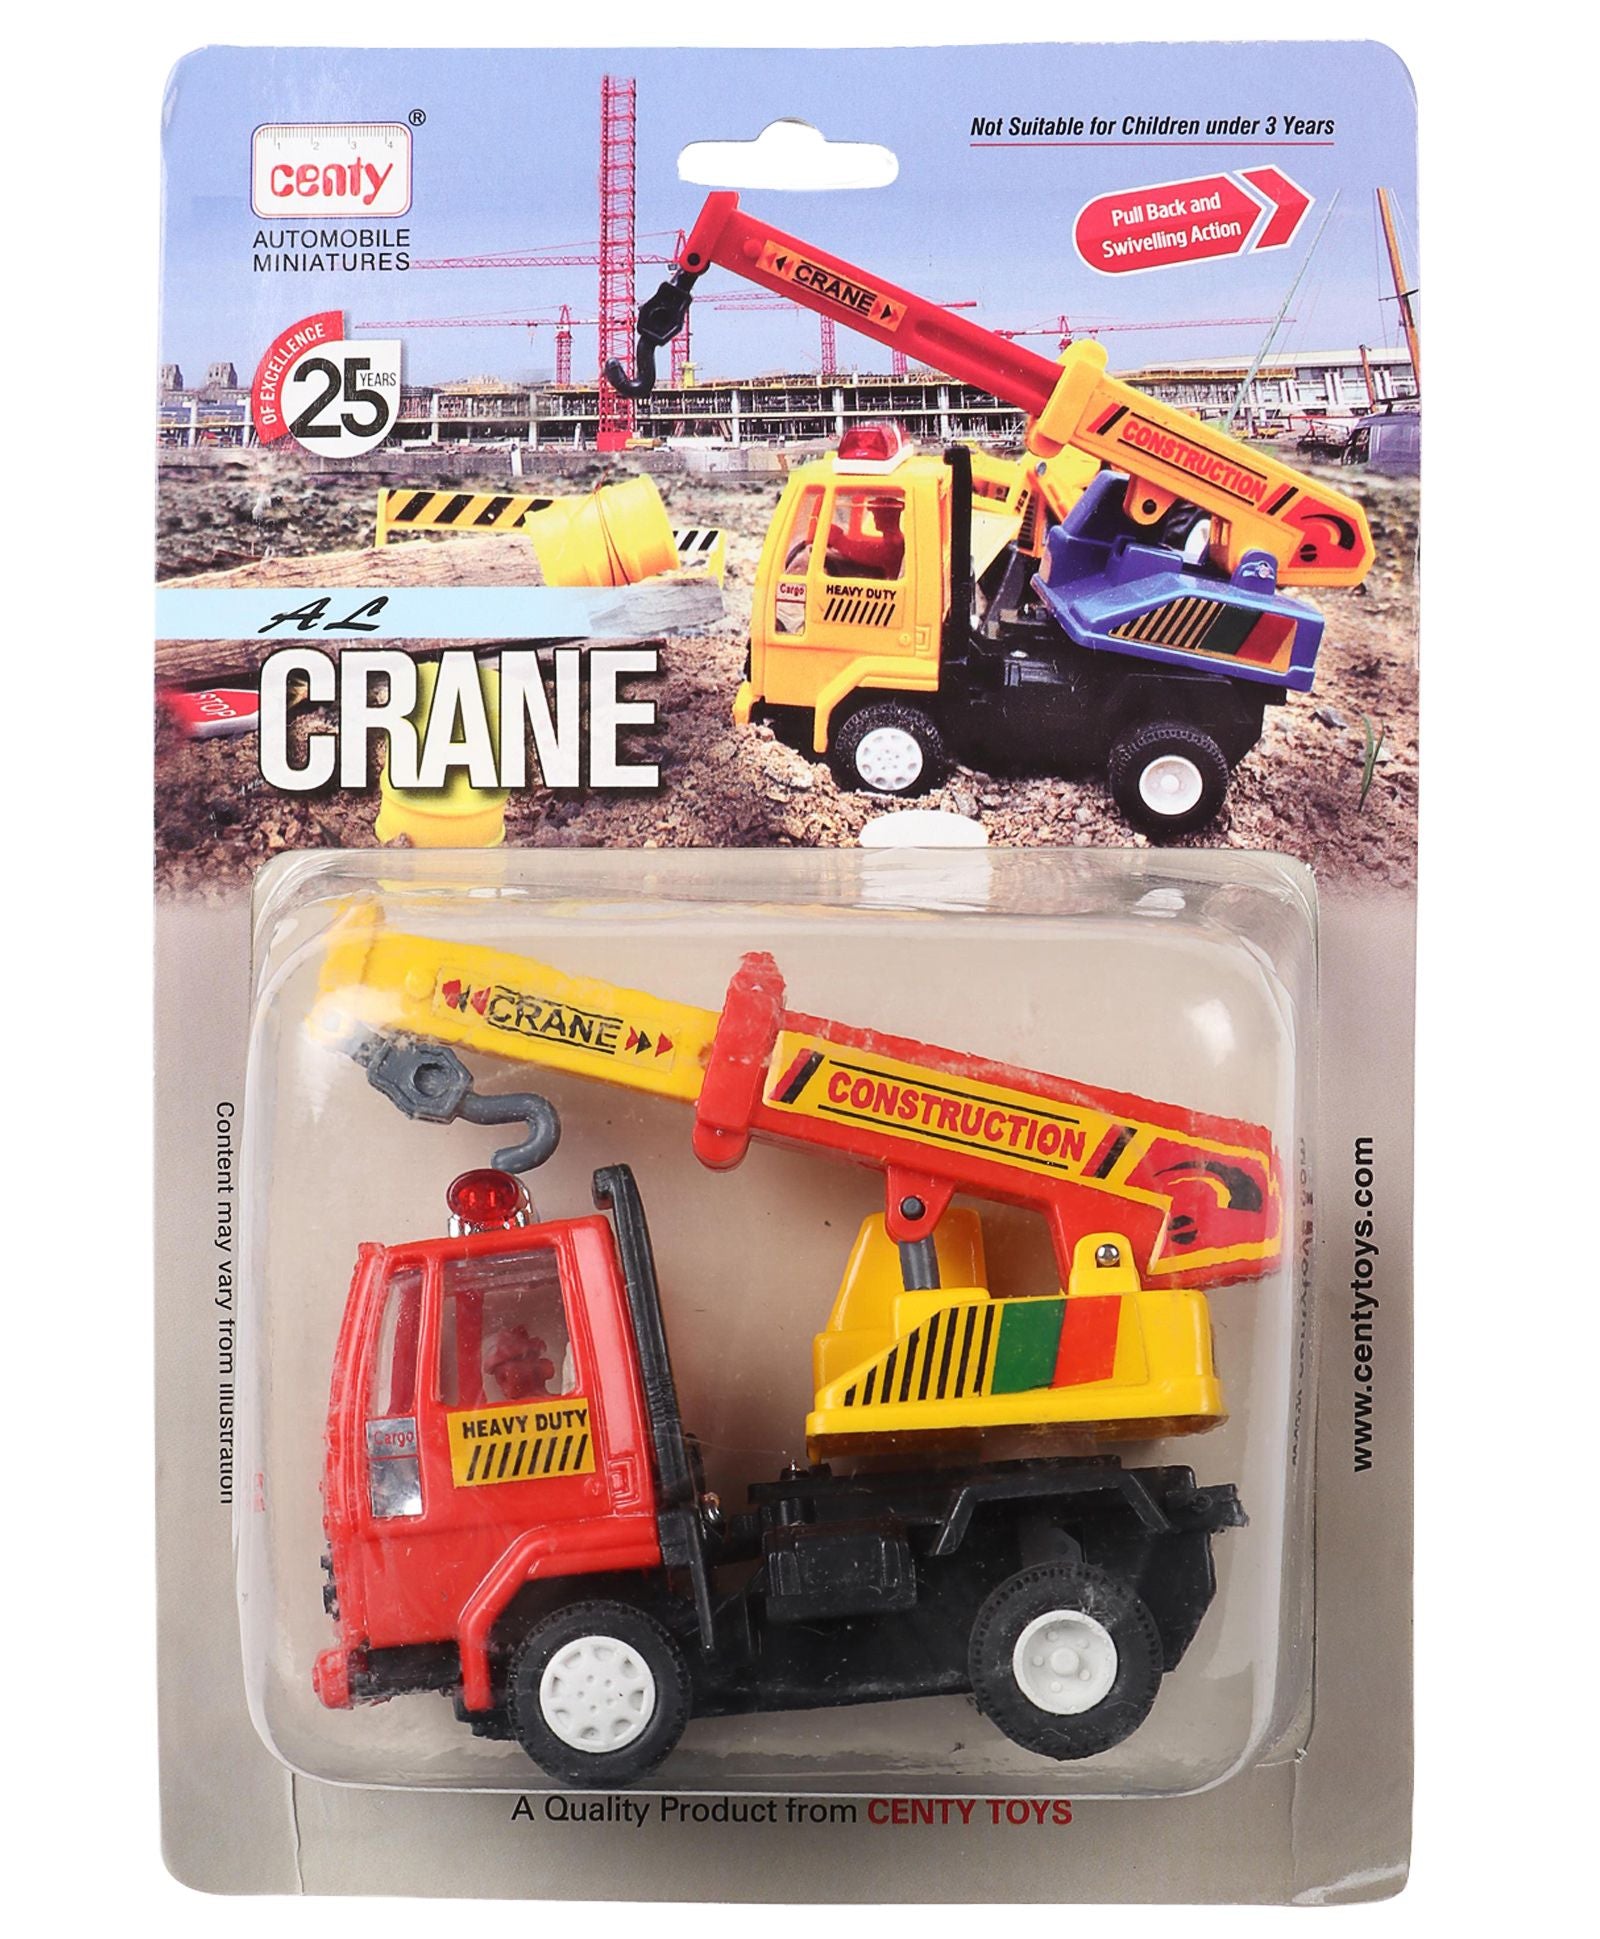 Centy Pullback Toy Crane (Color May Vary)